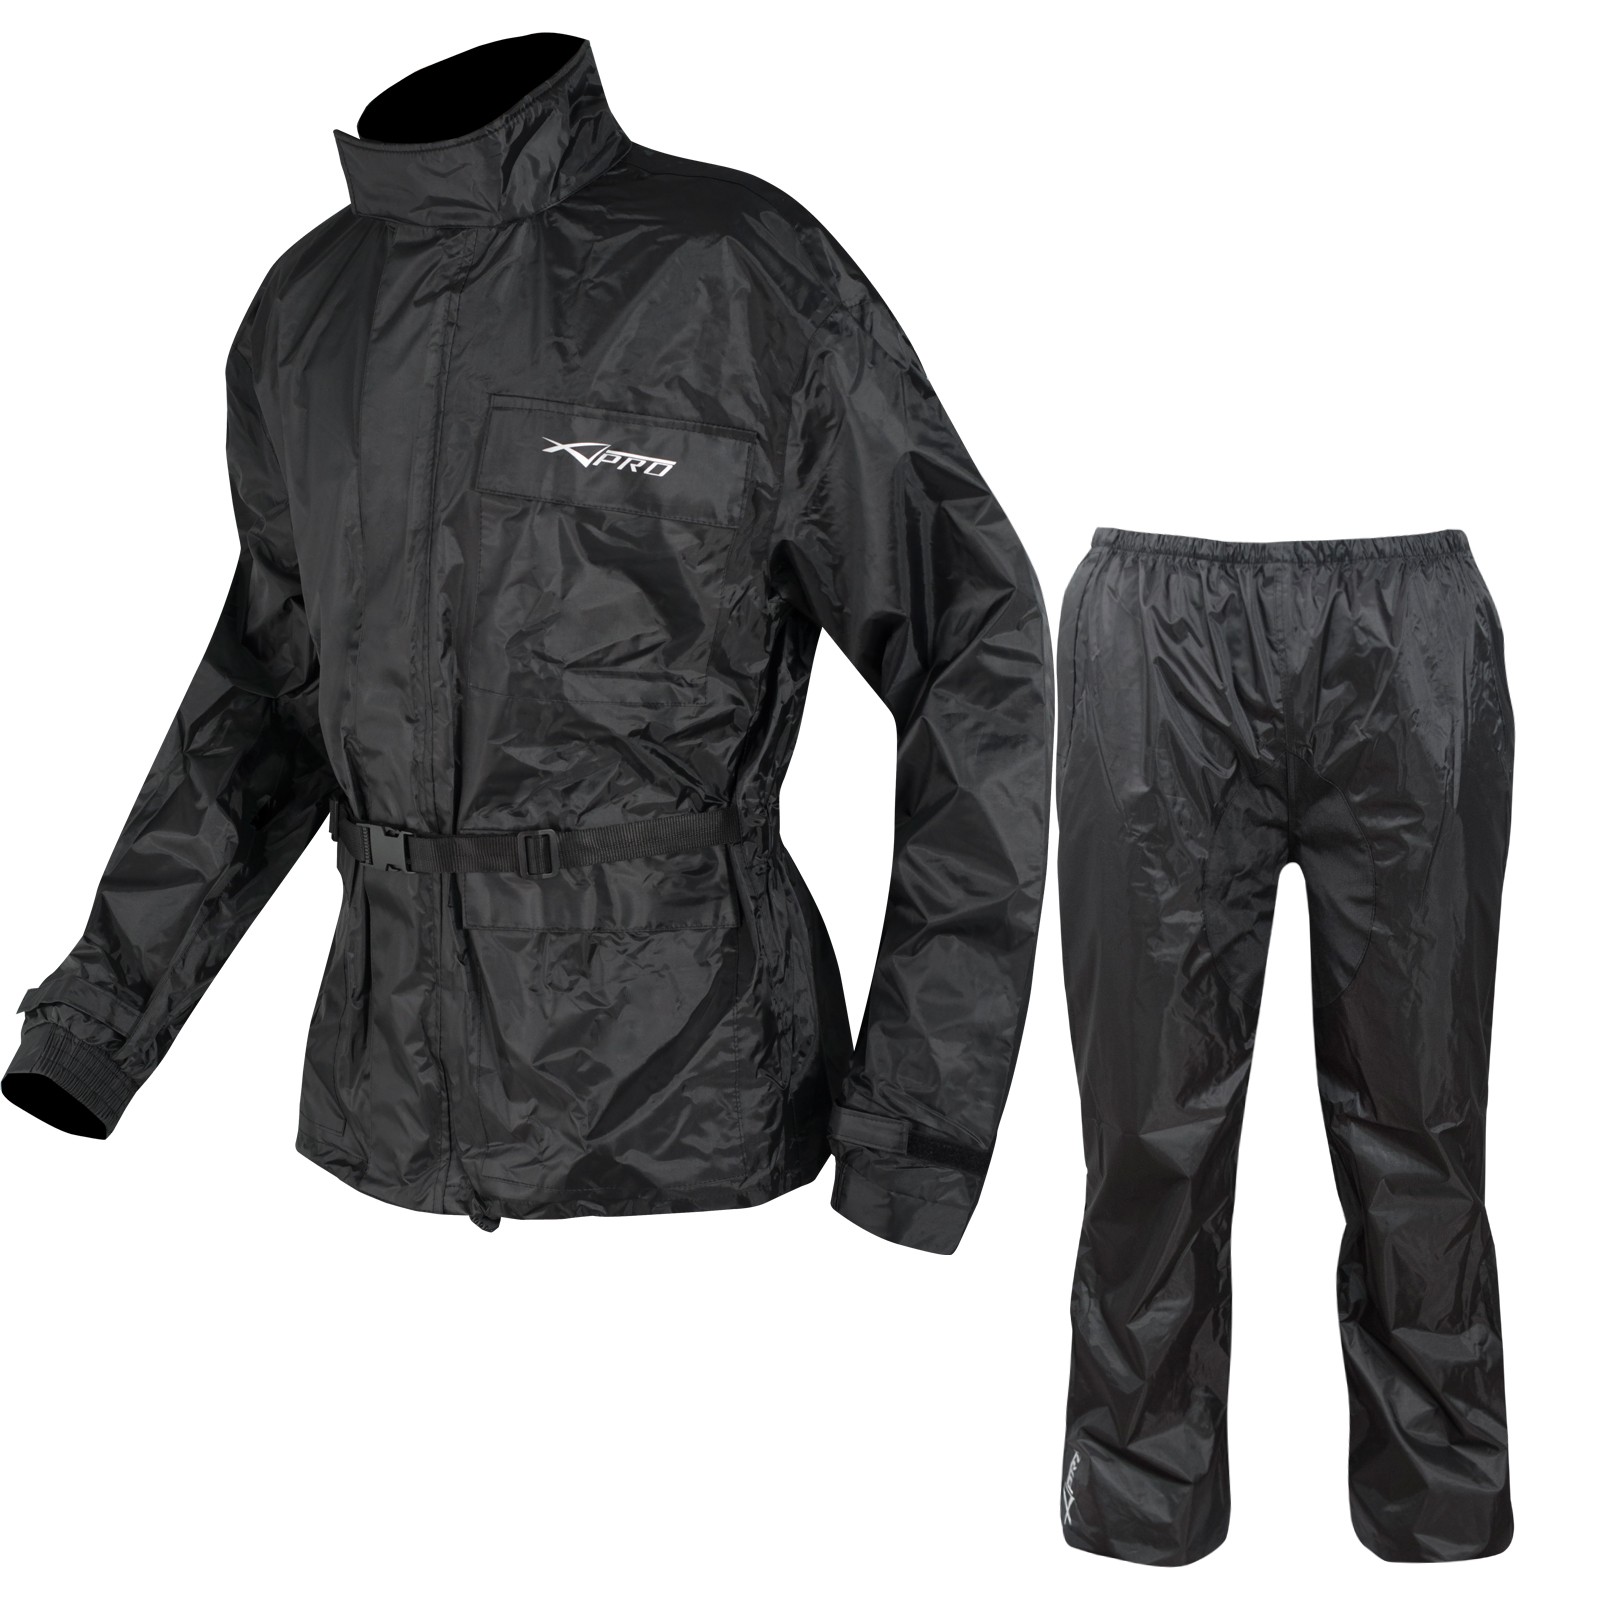 tuta antipioggia kit completo impermeabile giacca + pantalone - Maka Store